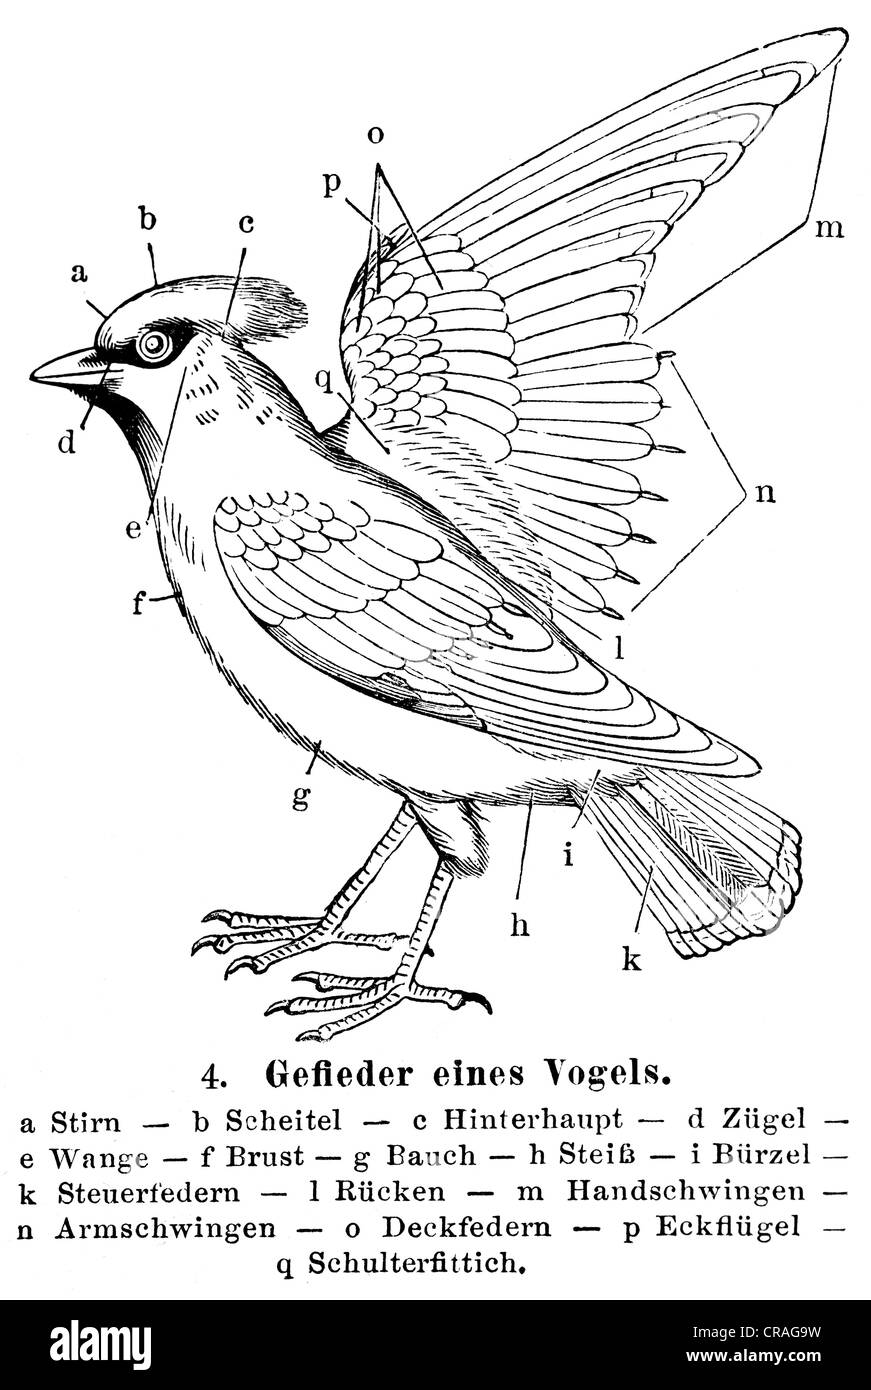 Plumage of a bird, illustration from Meyers Konversationslexikon encyclopedia, 1897 Stock Photo